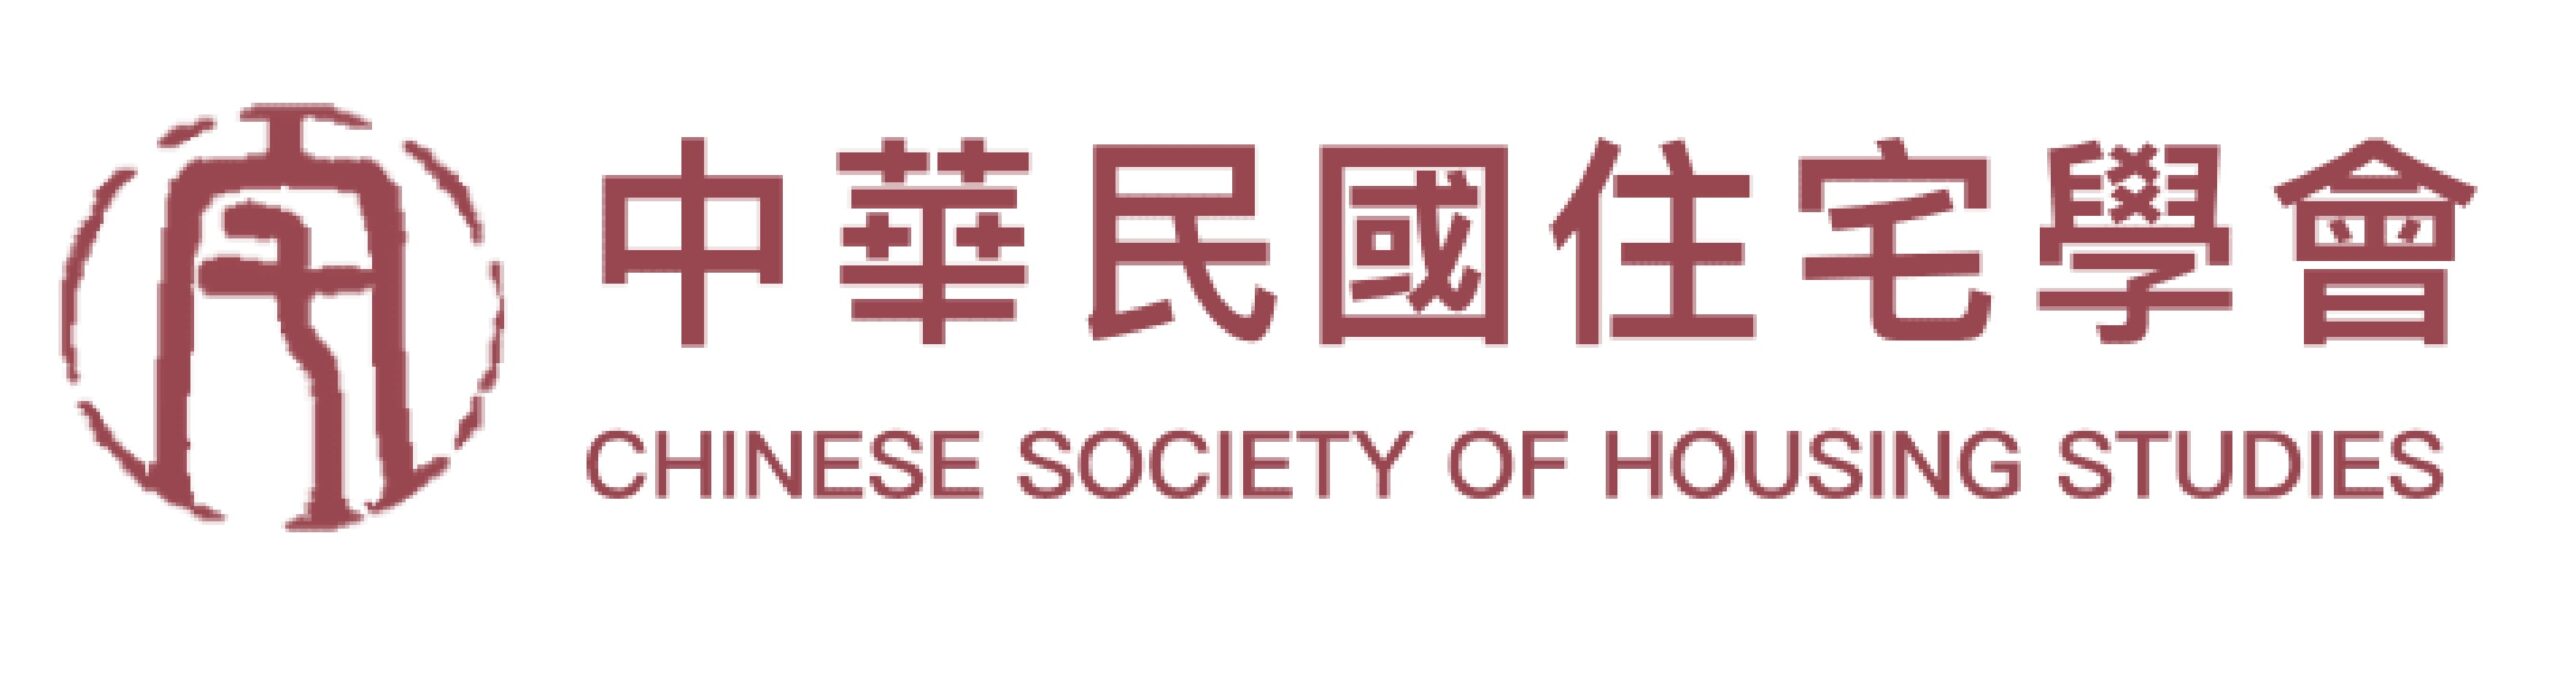 Chinese Society of Housing Studies